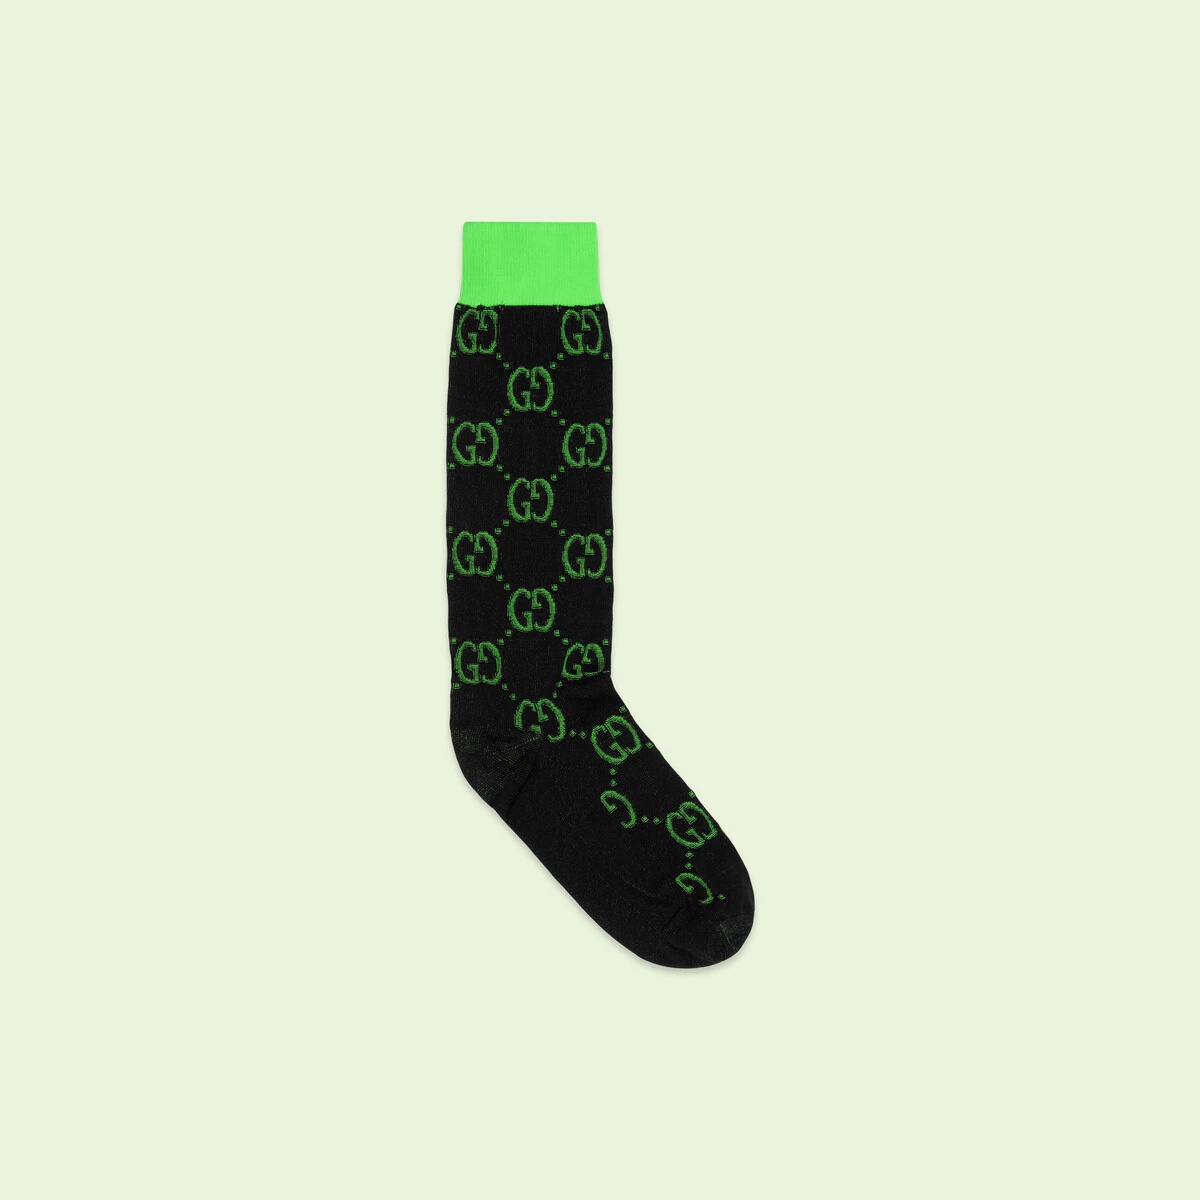 GG knit socks - 1